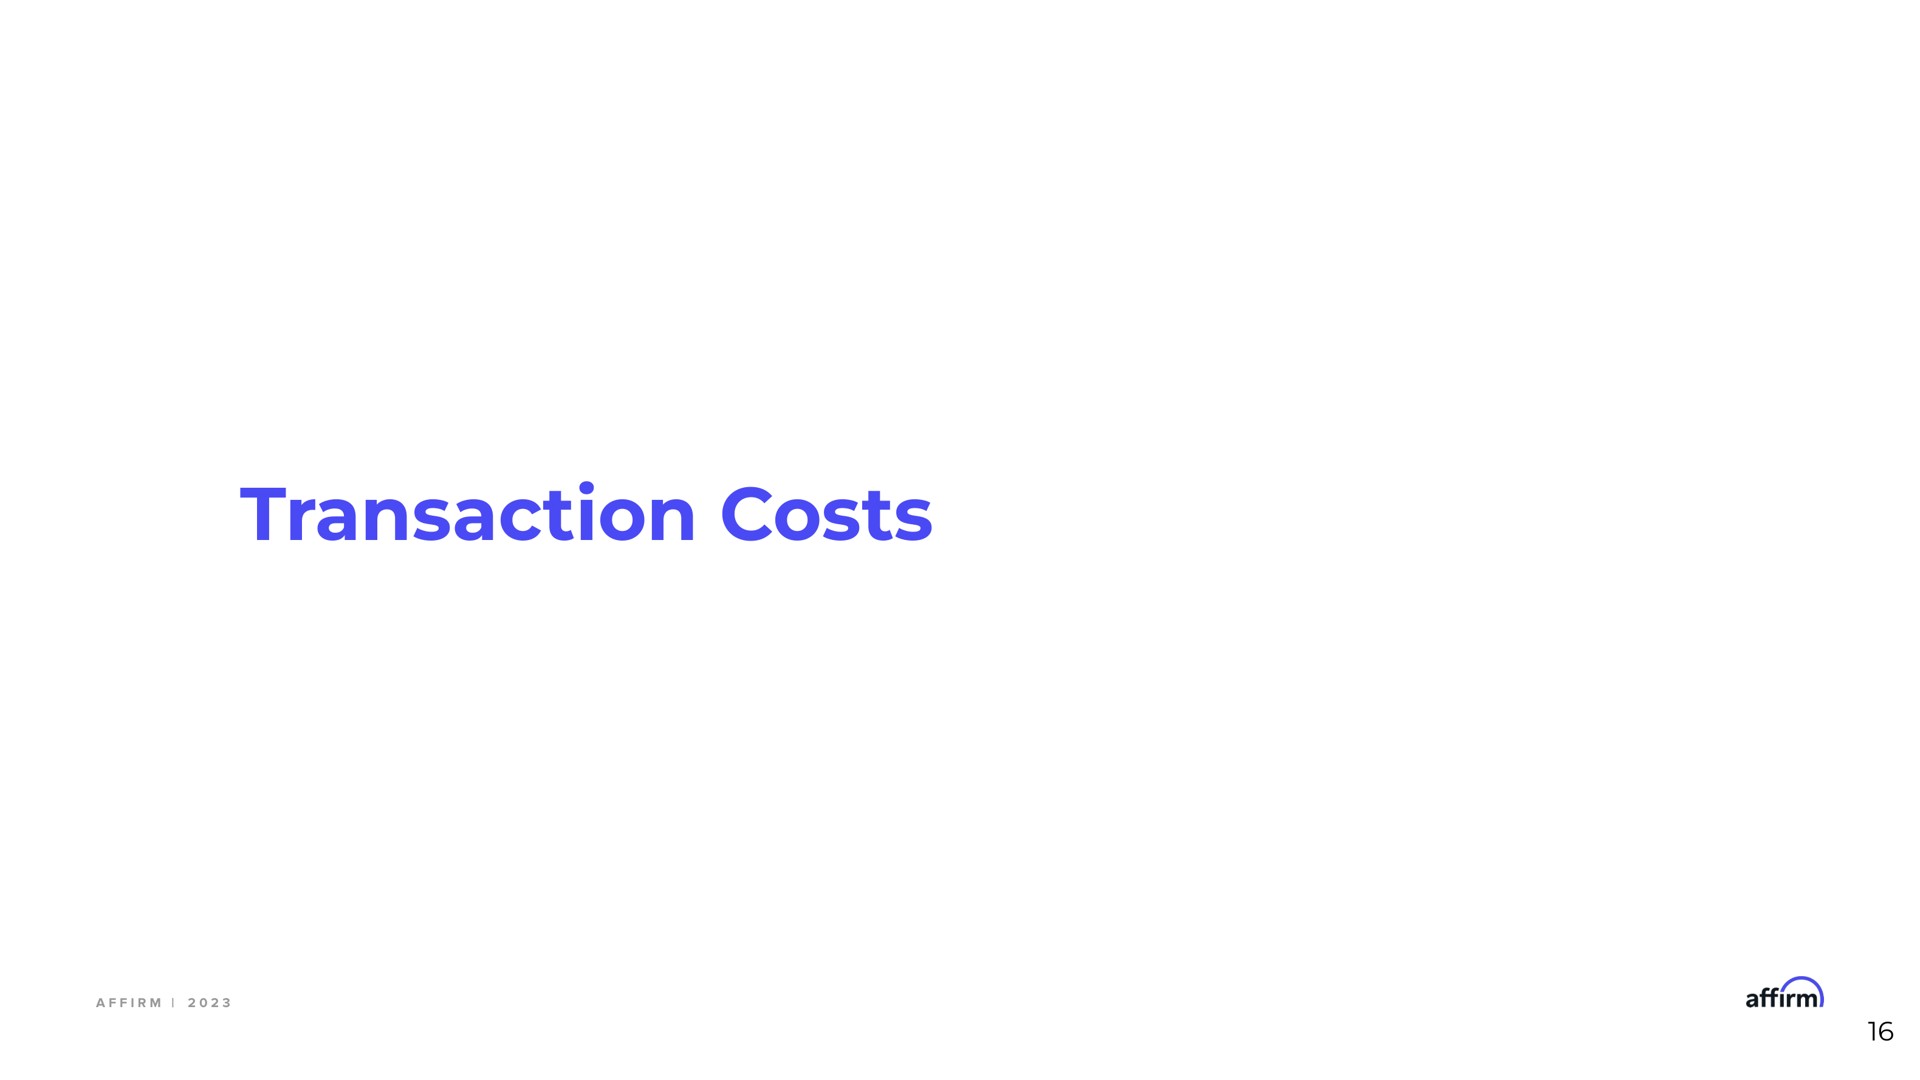 transaction costs | Affirm